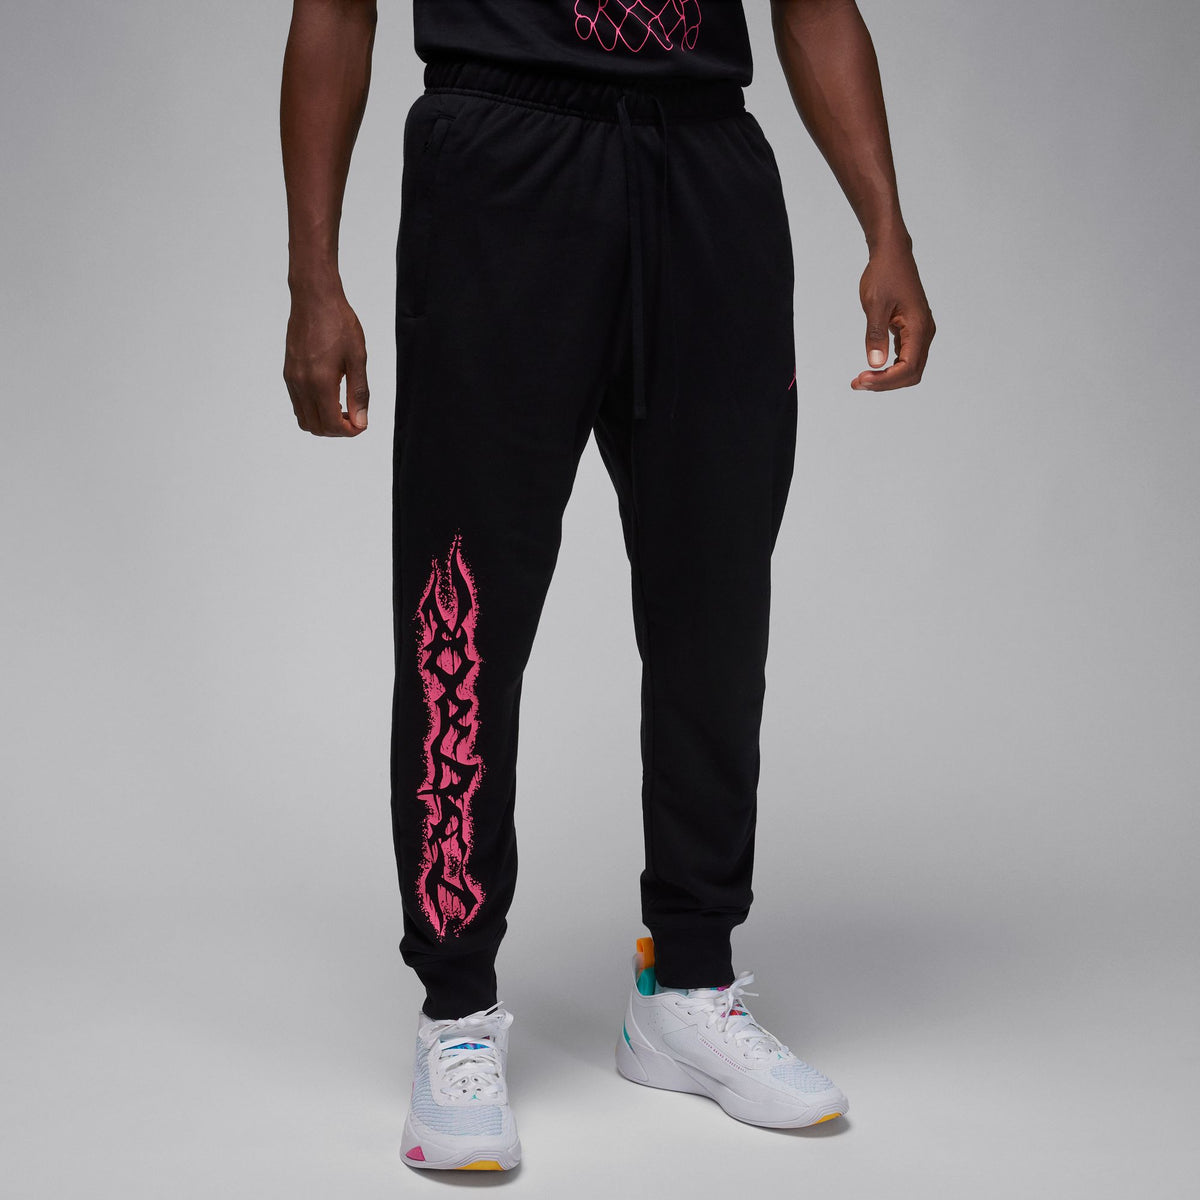 Nike Jordan AJ Compression Shield Tight Pants Training, XL